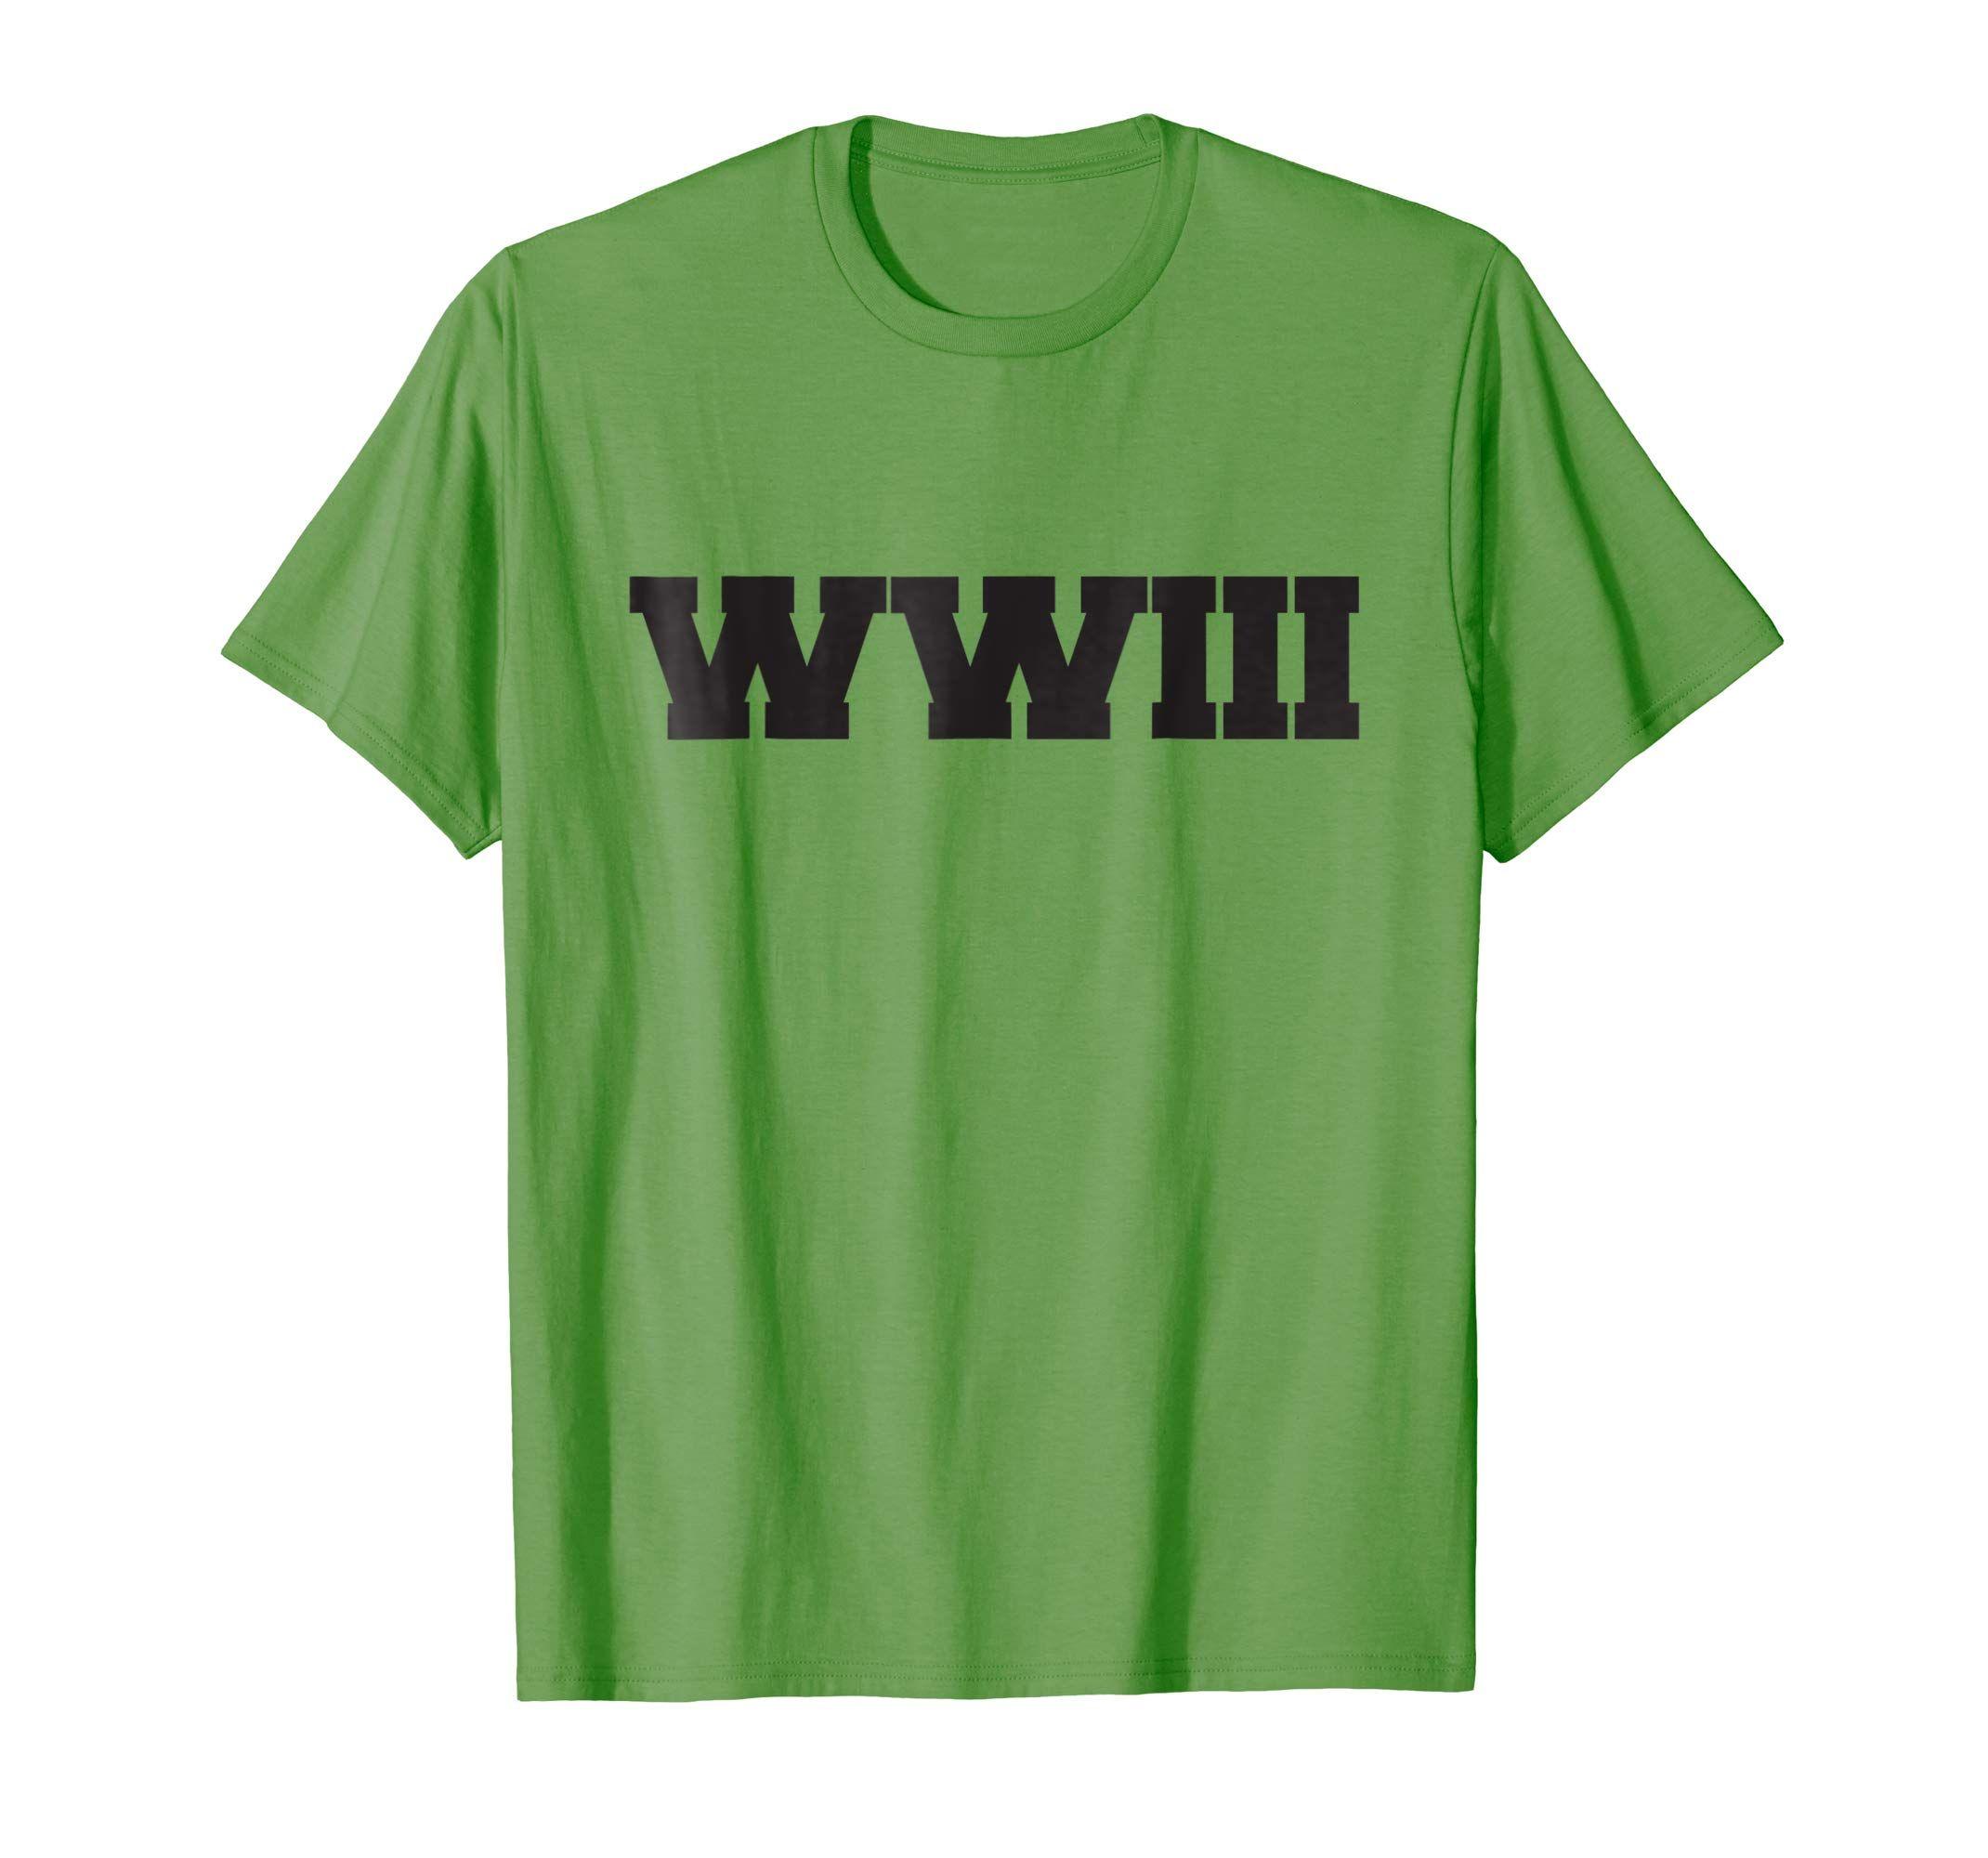 WWIII Logo - Amazon.com: WWIII (World War 3) T-Shirt: Clothing